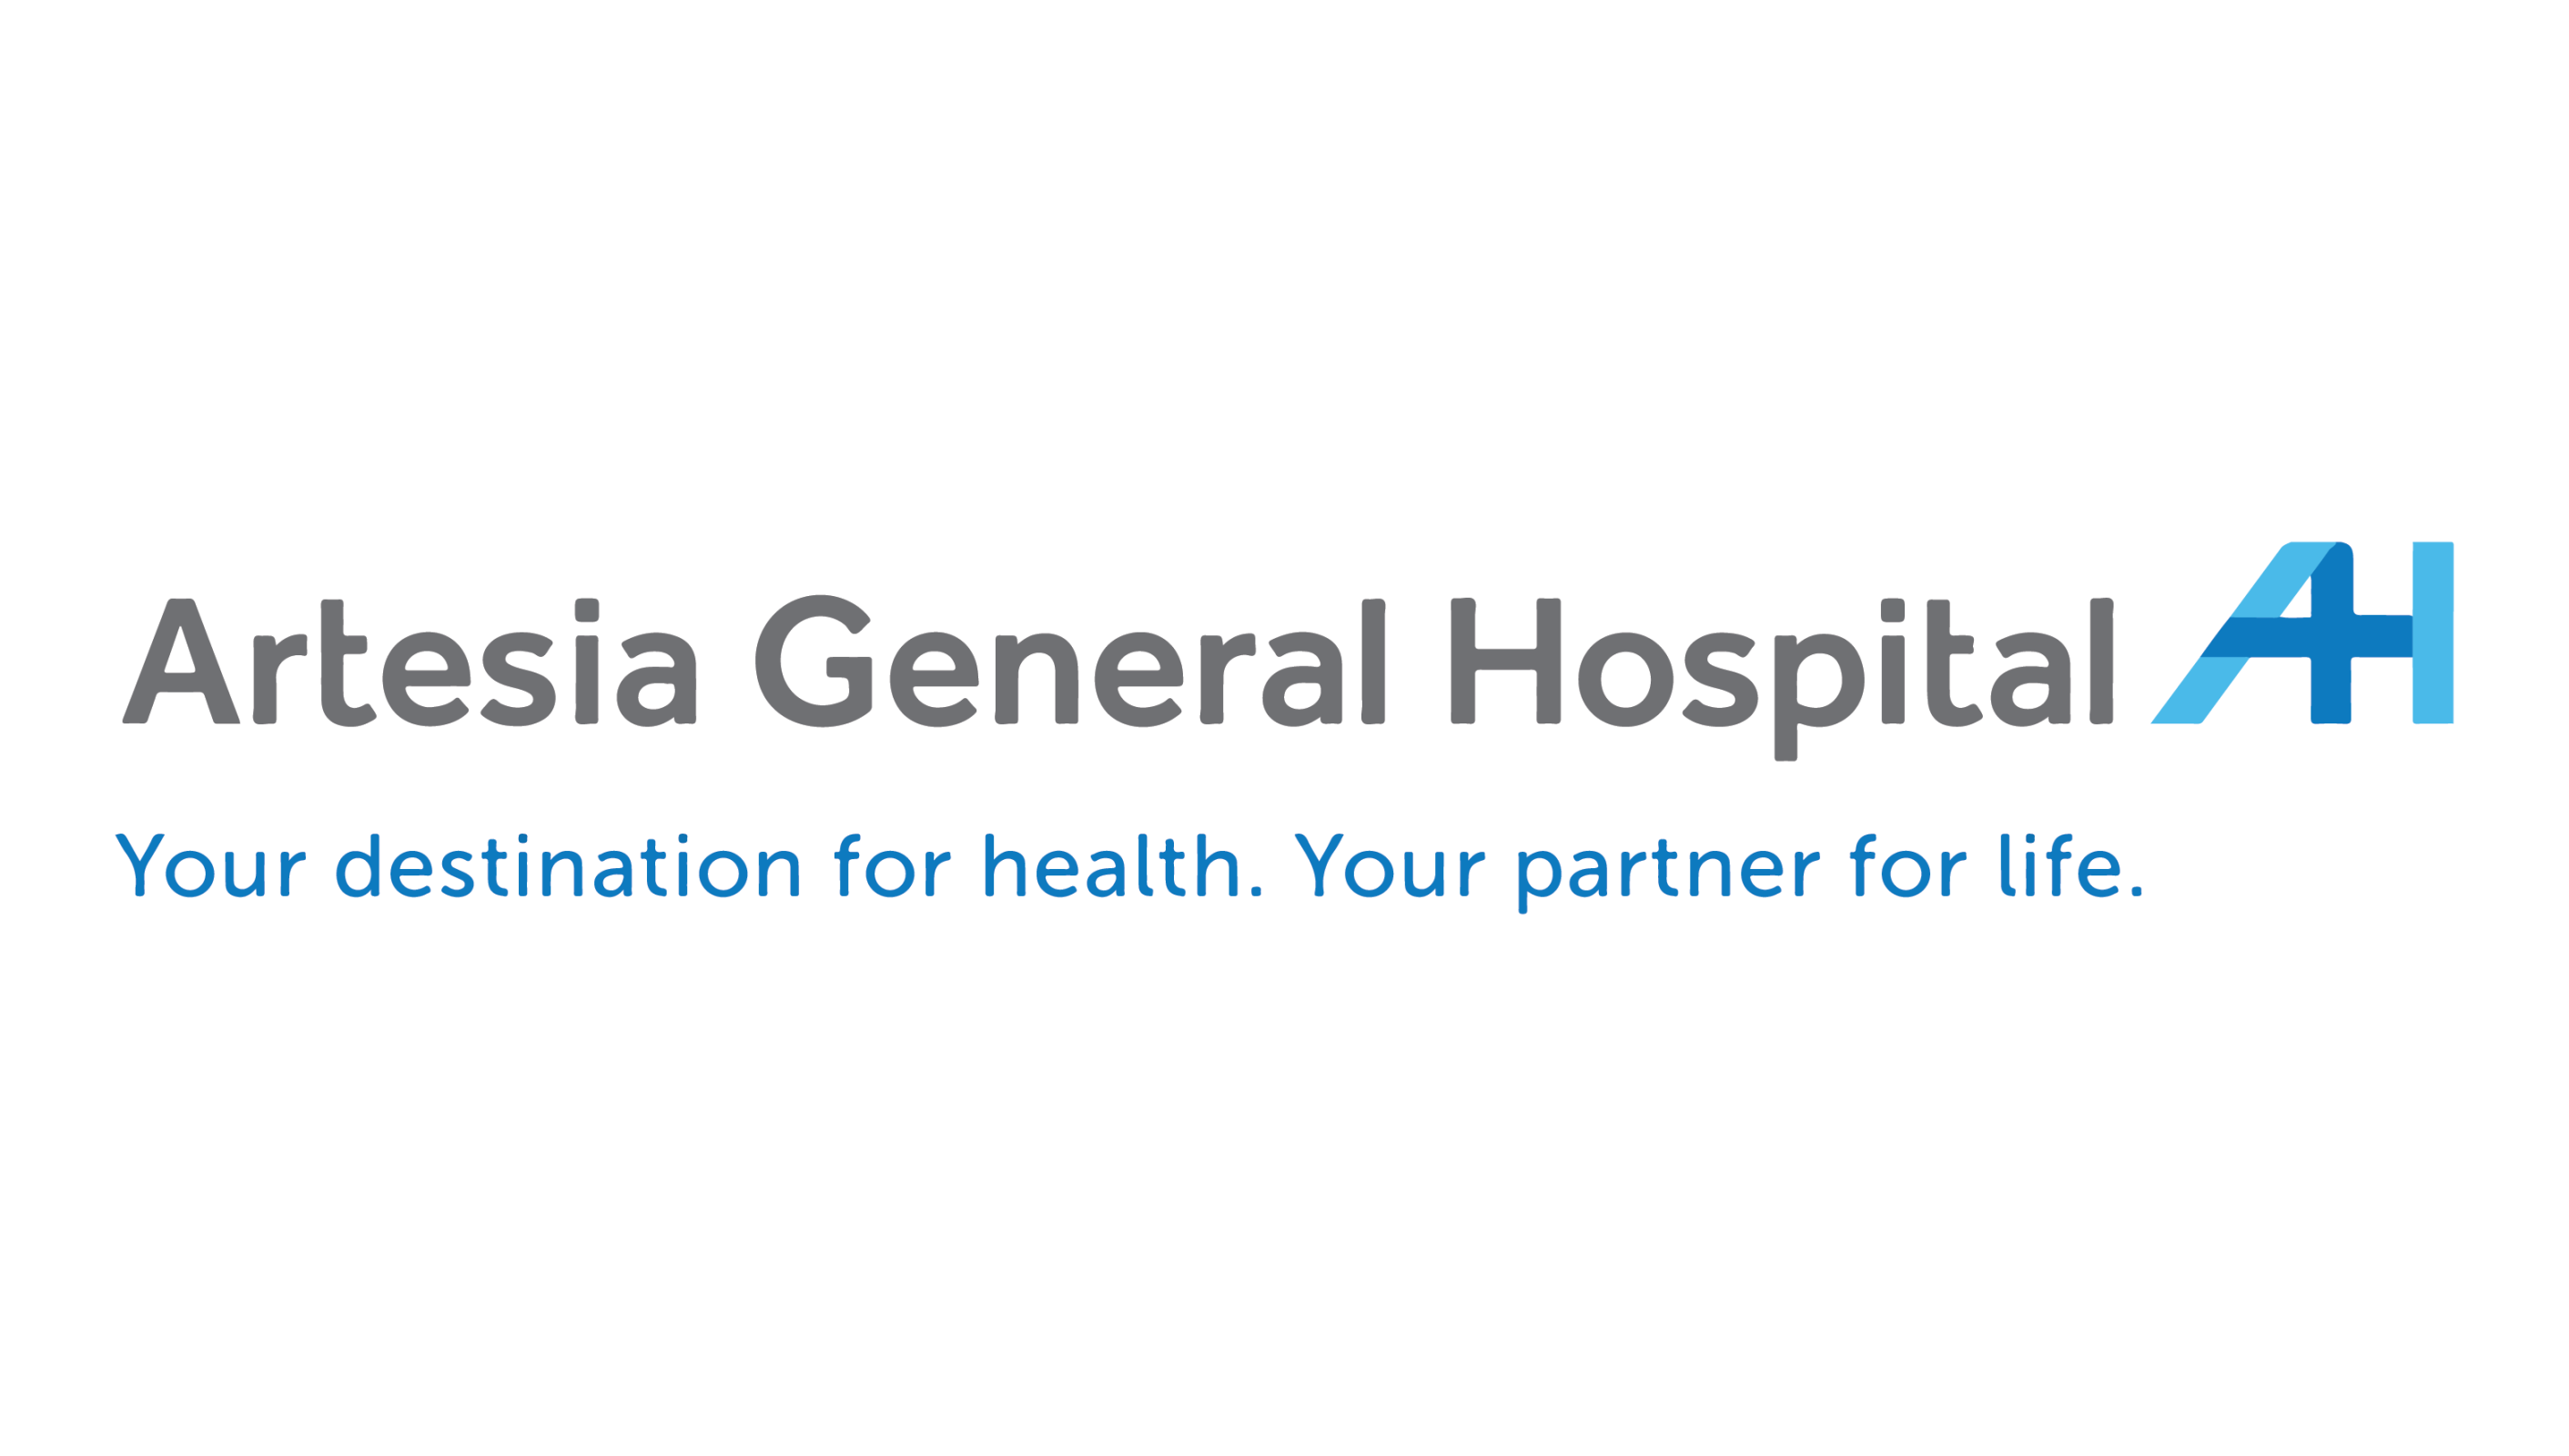 Artesia General Hospital's Image